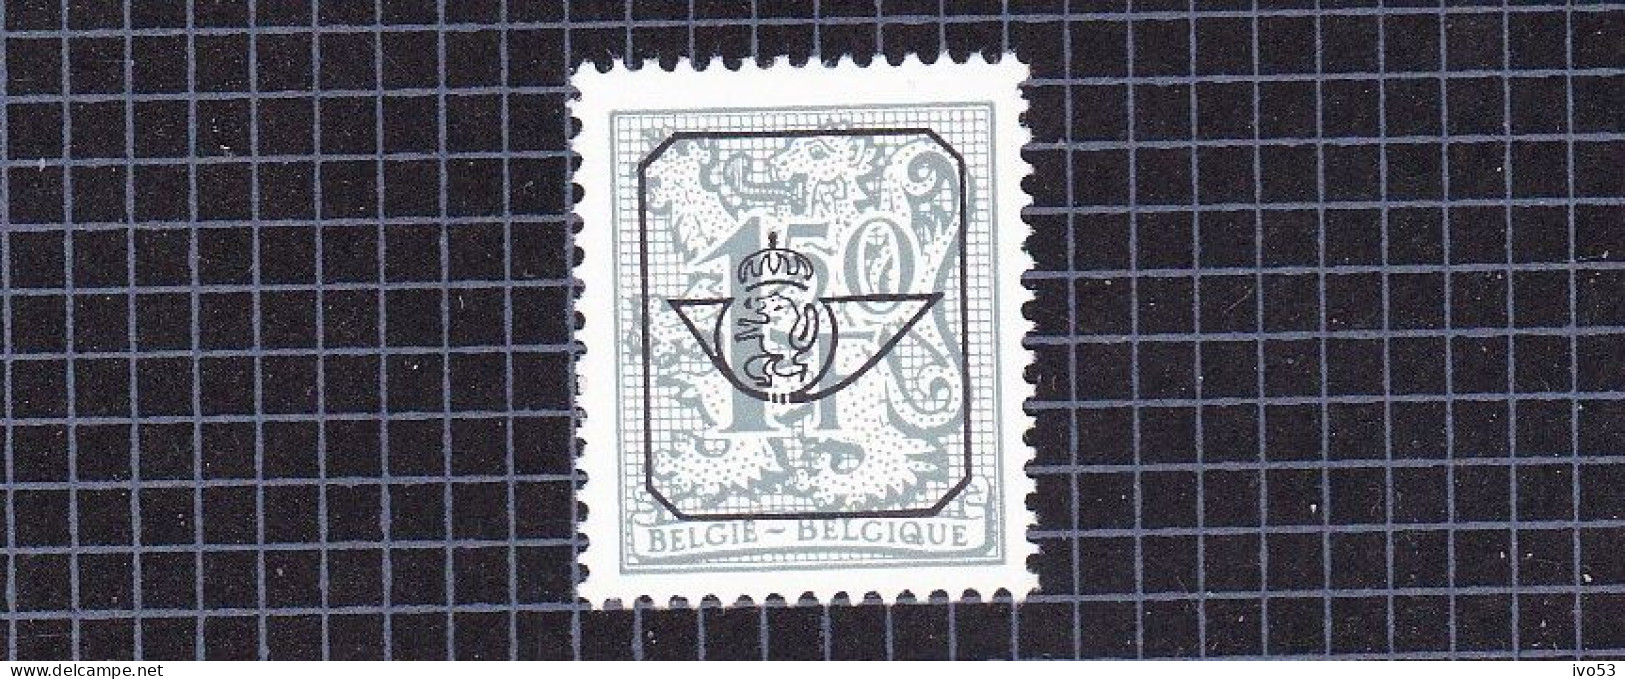 1980 Nr PRE801P4 ** Postfris,Heraldieke Leeuw.1,5fr. - Typo Precancels 1951-80 (Figure On Lion)